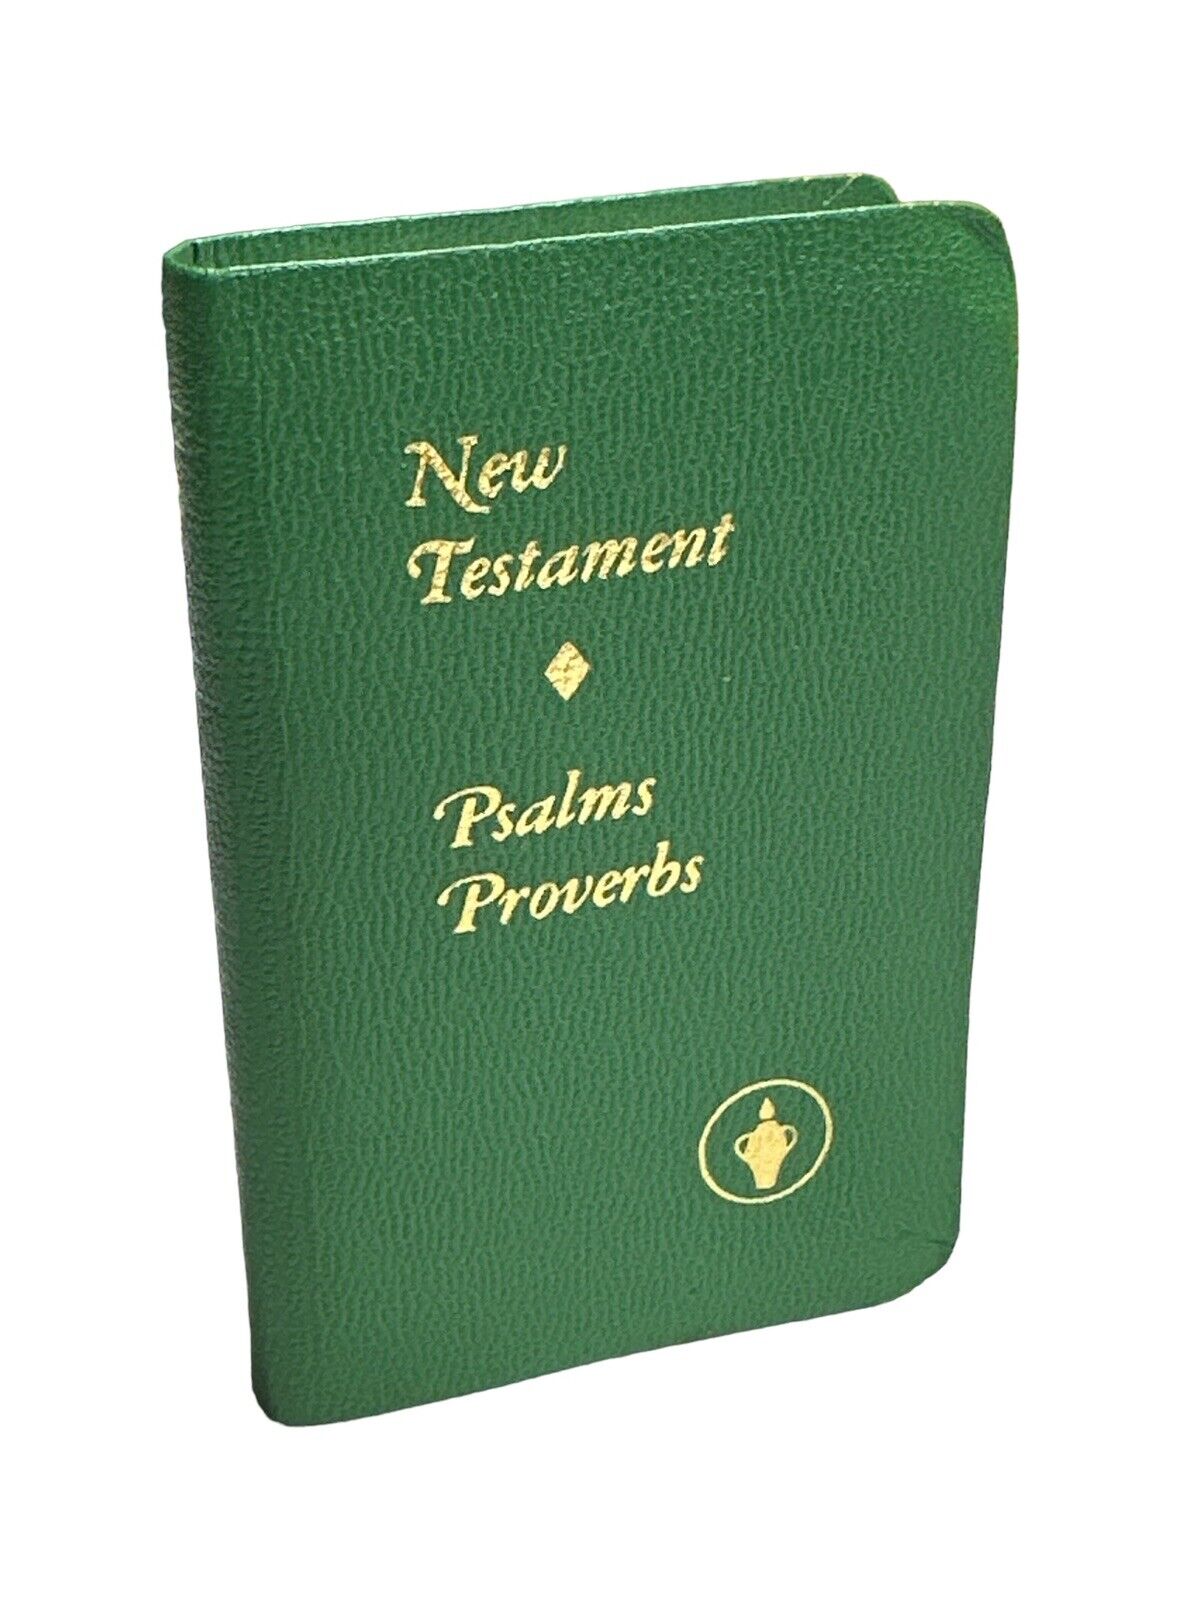 Vintage 1968 Gideon Pocket Bible New Testament Psalms Proverbs - Green 